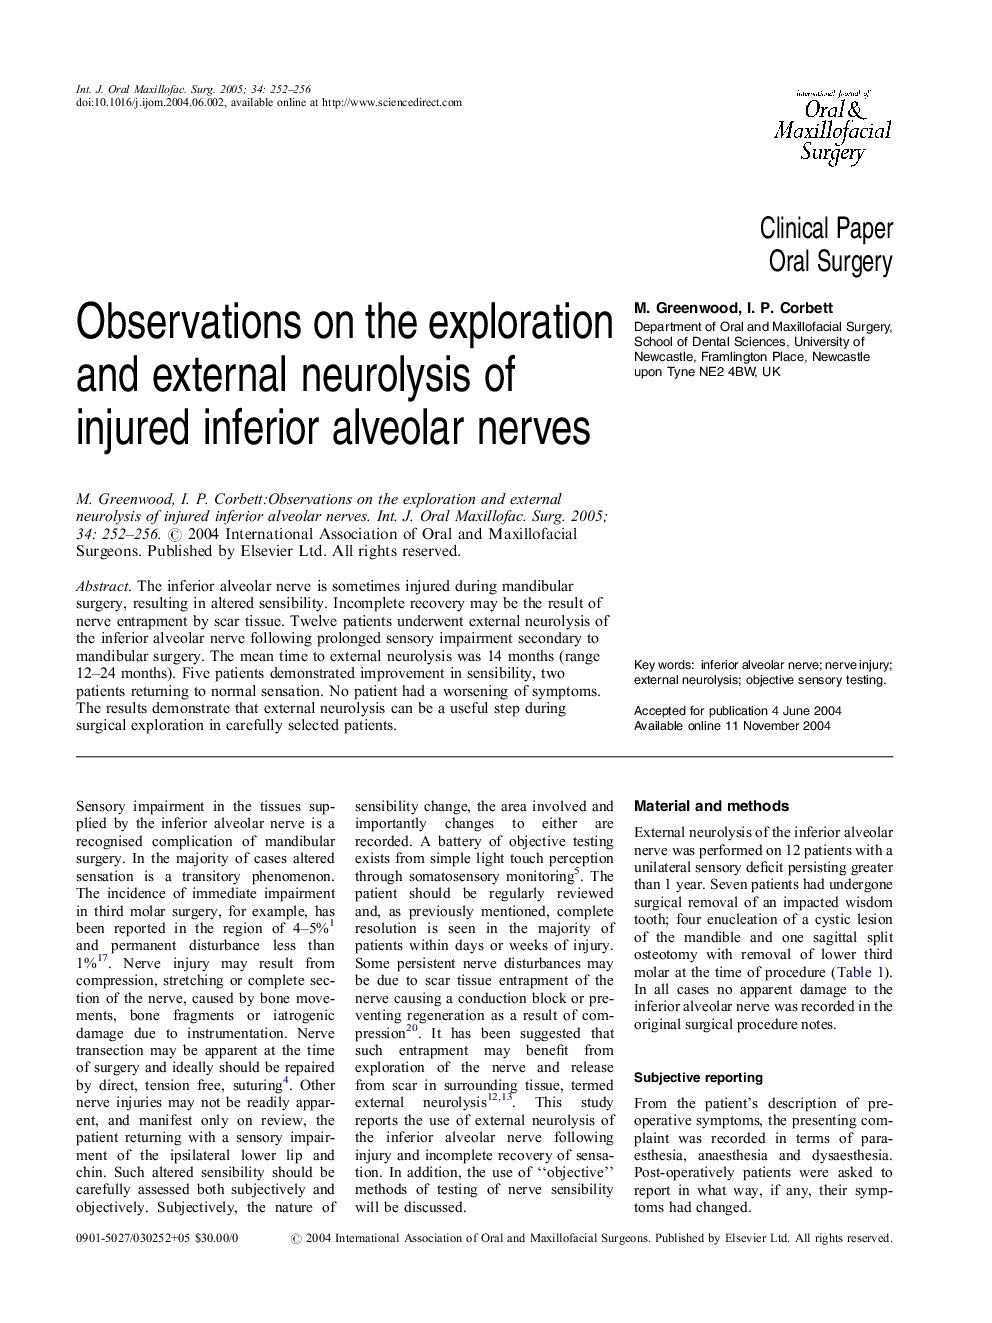 Observations on the exploration and external neurolysis of injured inferior alveolar nerves